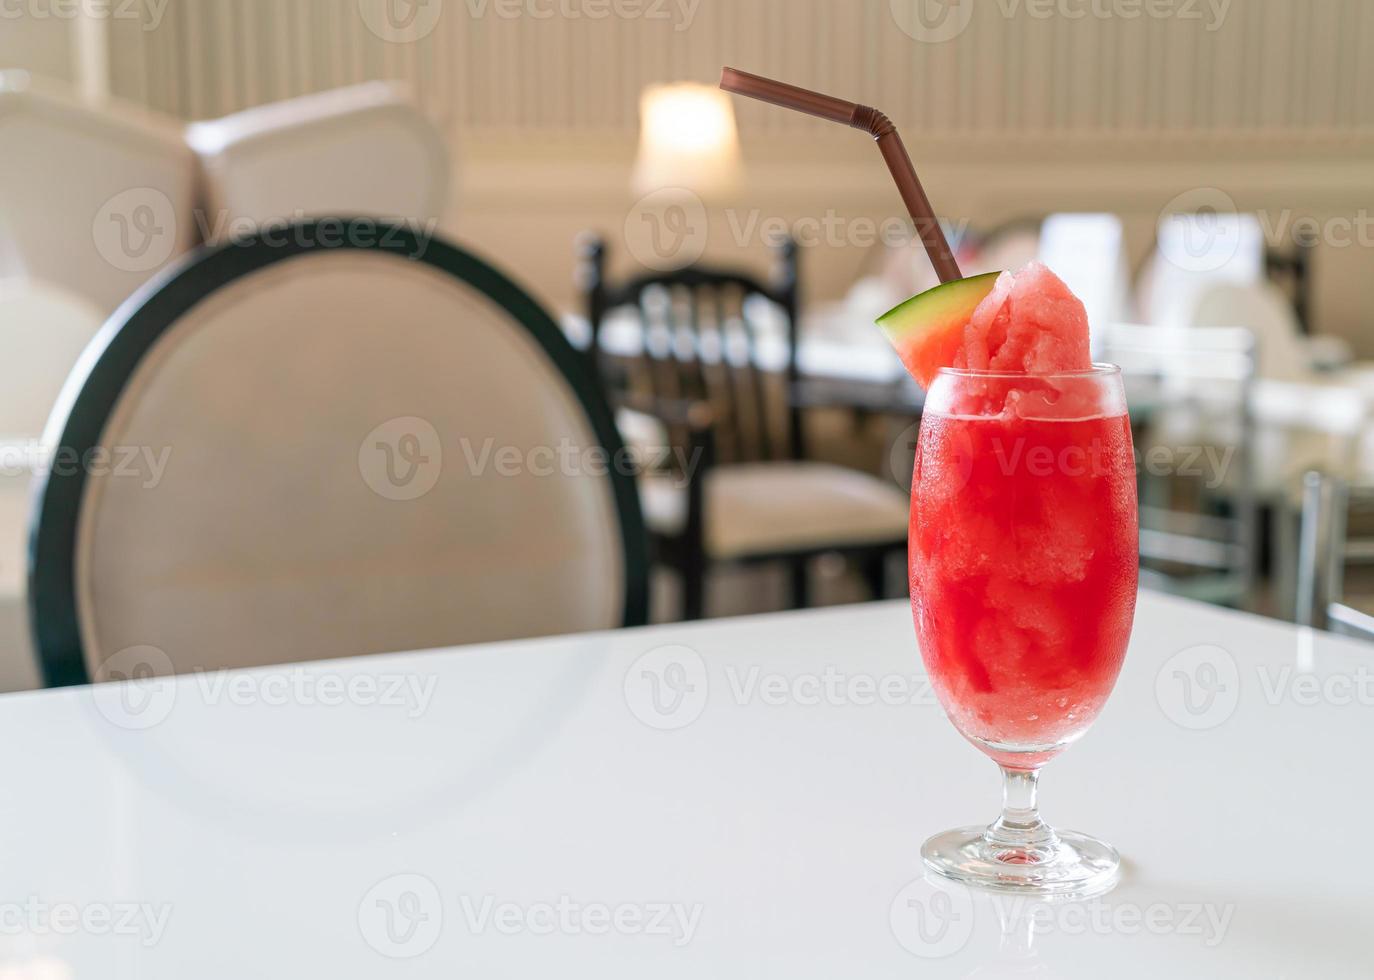 vers watermeloen smoothie glas op tafel in café restaurant foto